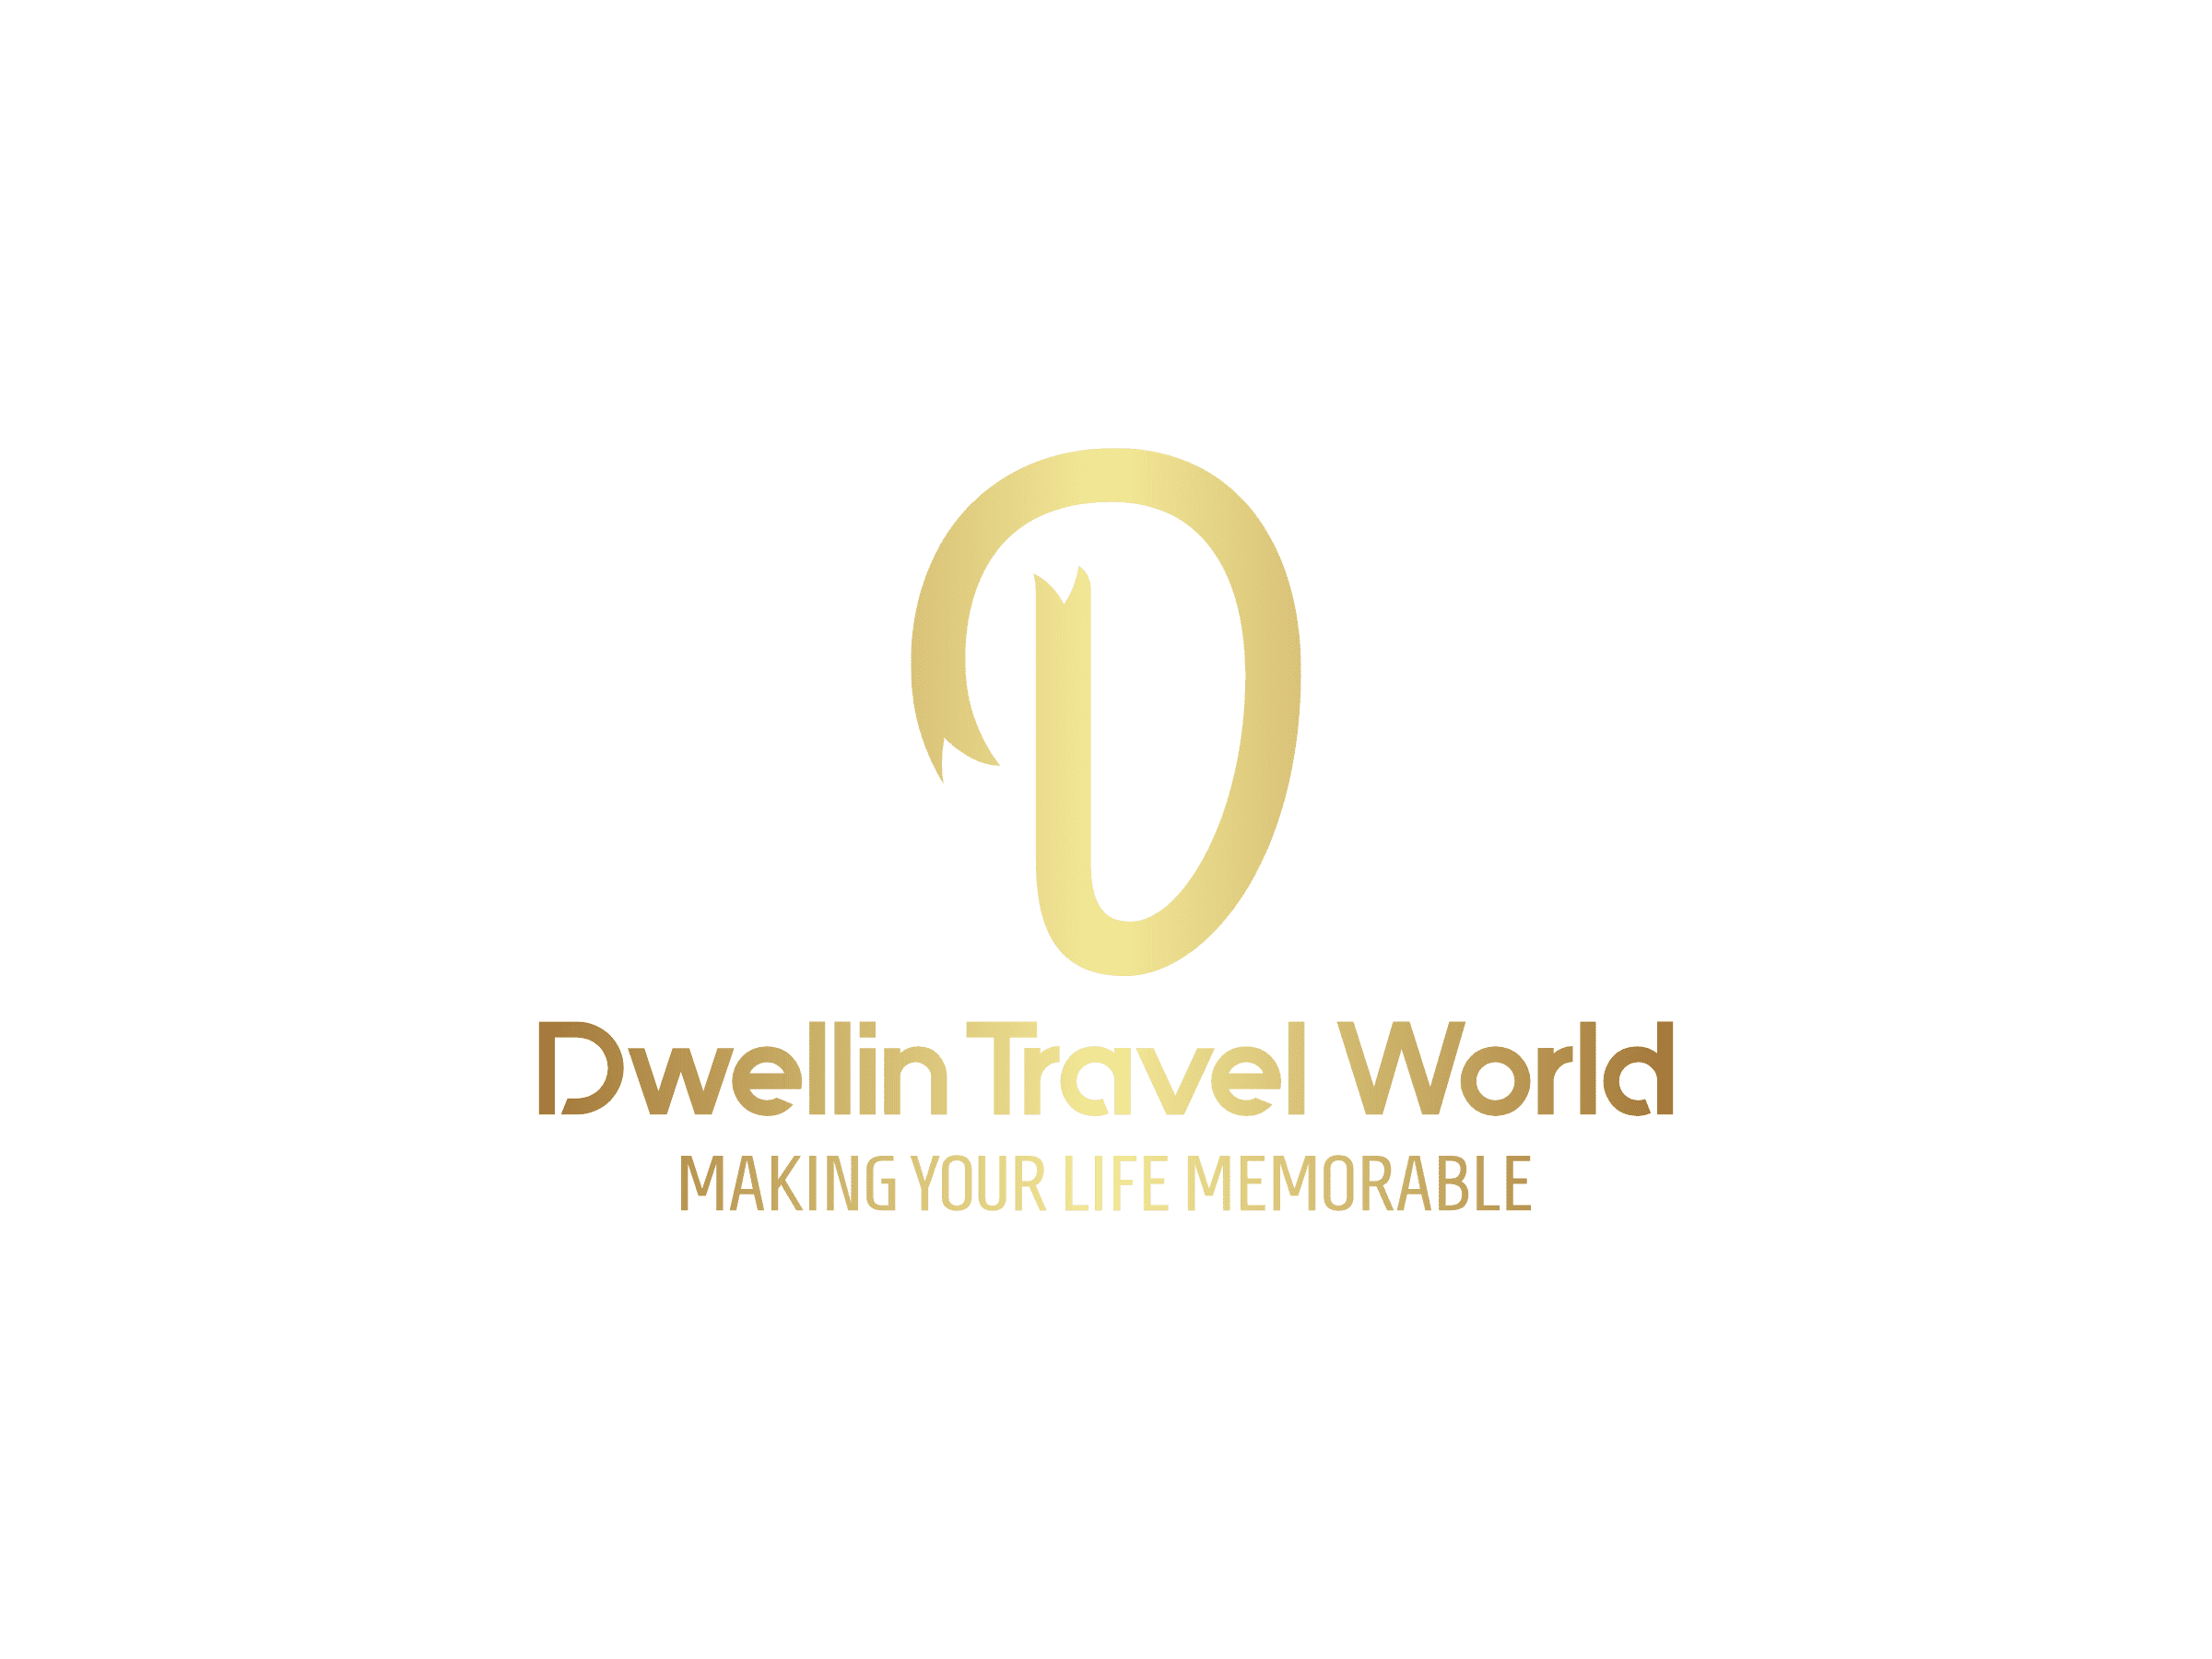 DWELLIN TRAVEL WORLD